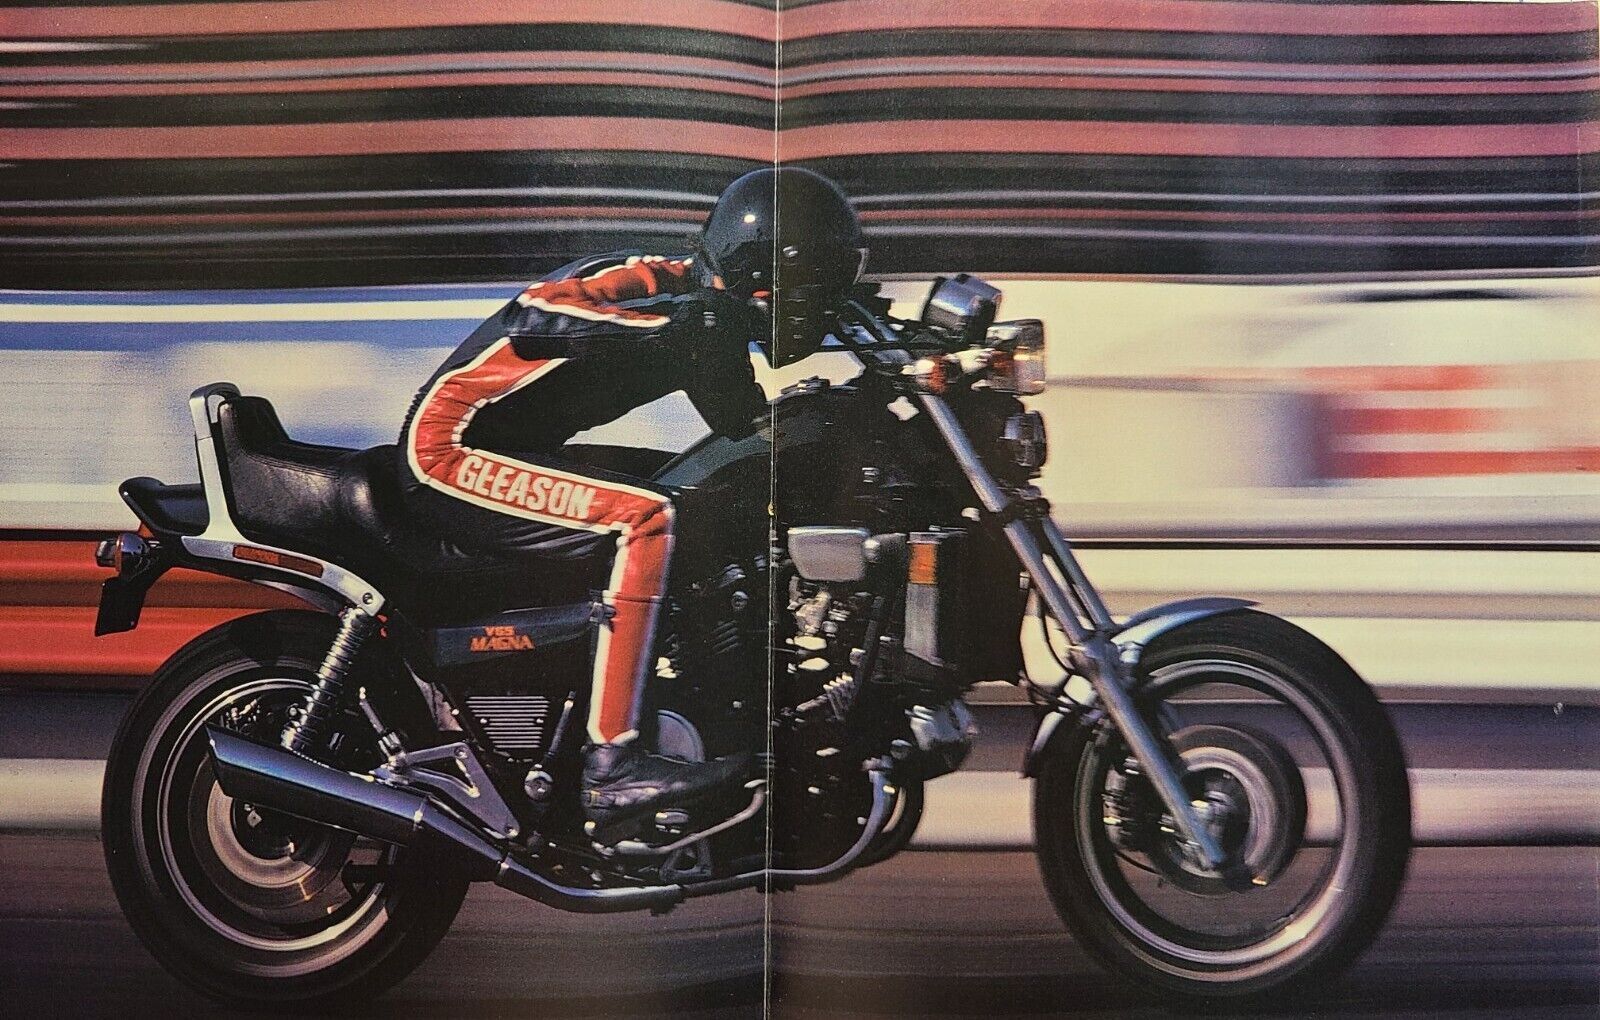 Vintage Print Ad 1982 Honda V65 Magna Motorcycle At Track Speed - Gleason